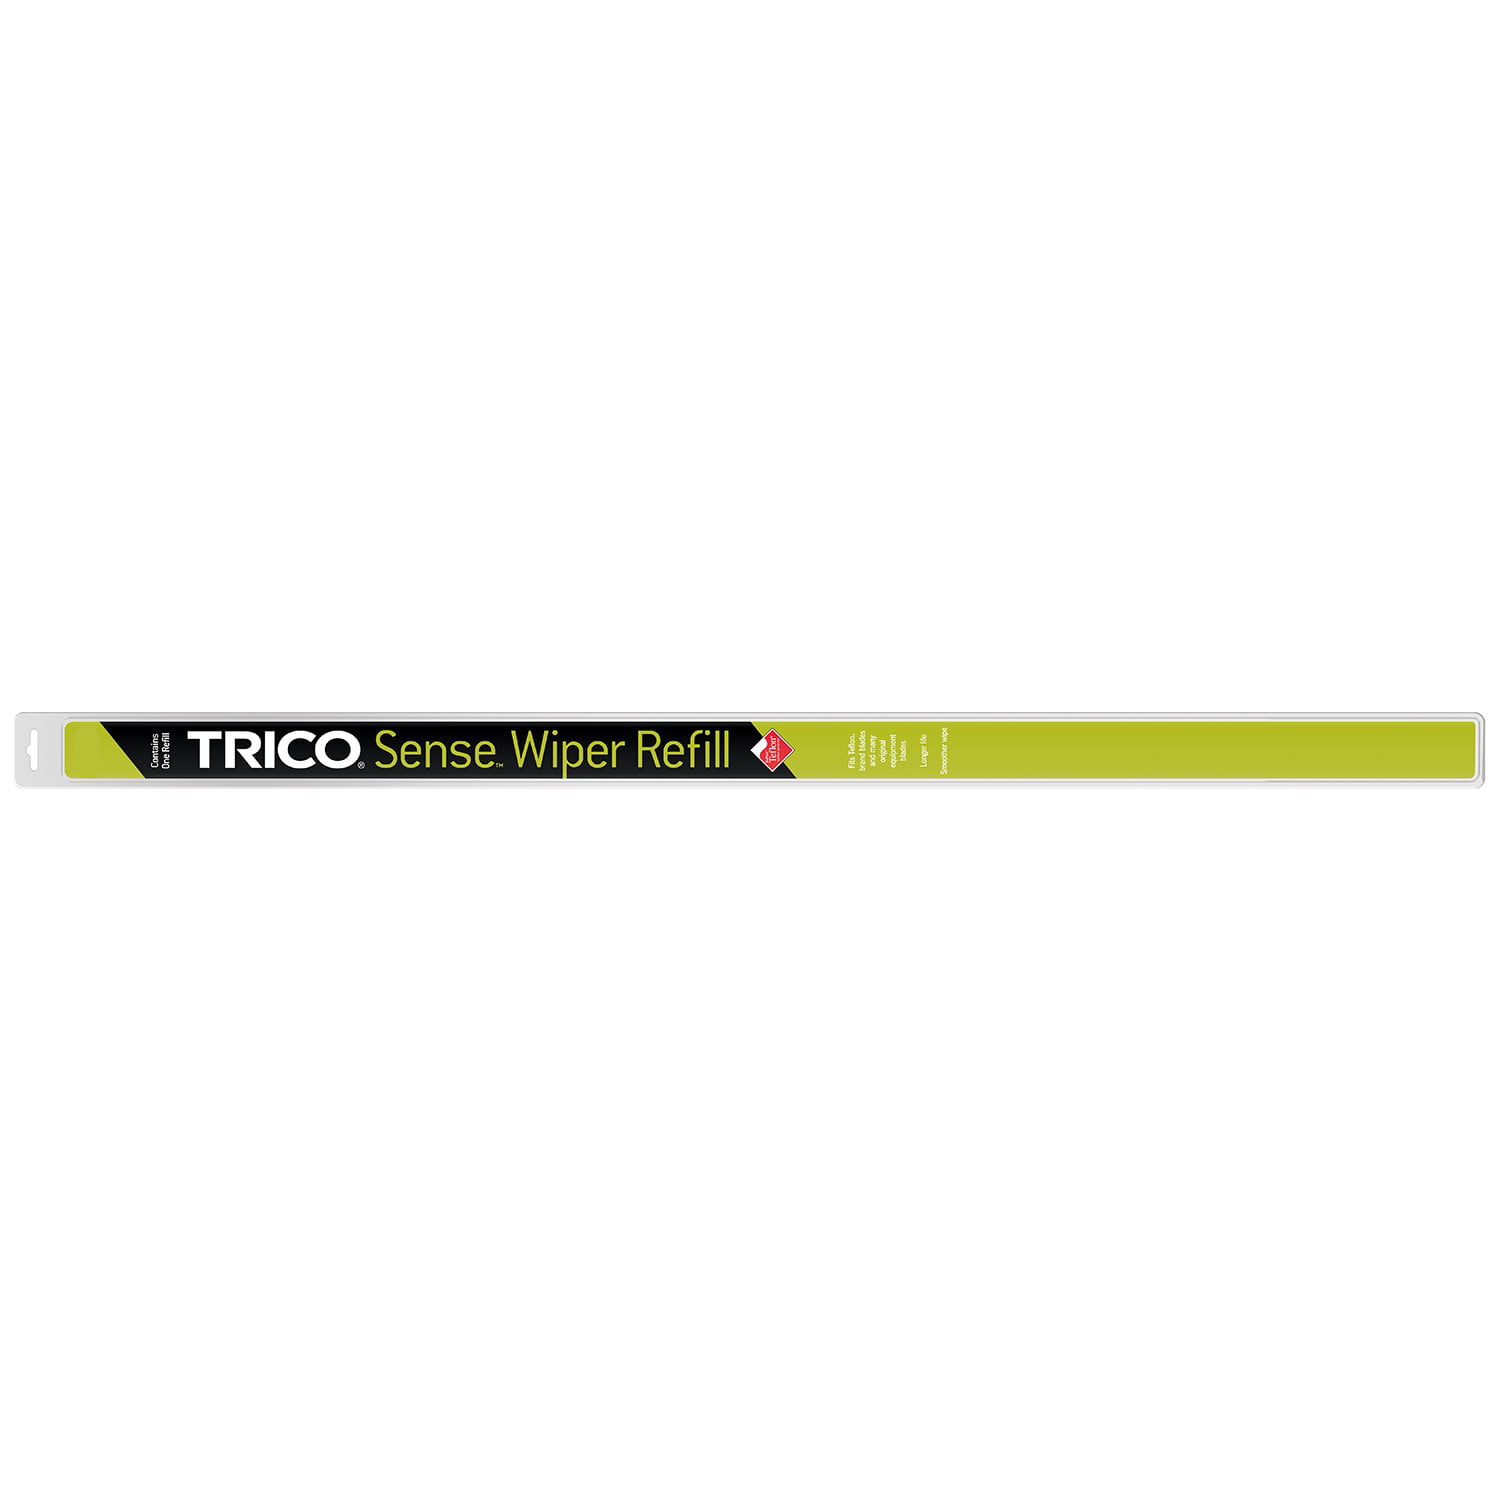 Trico 17-190 Sense REFILL Wiper Blade 19 Pack of 1 